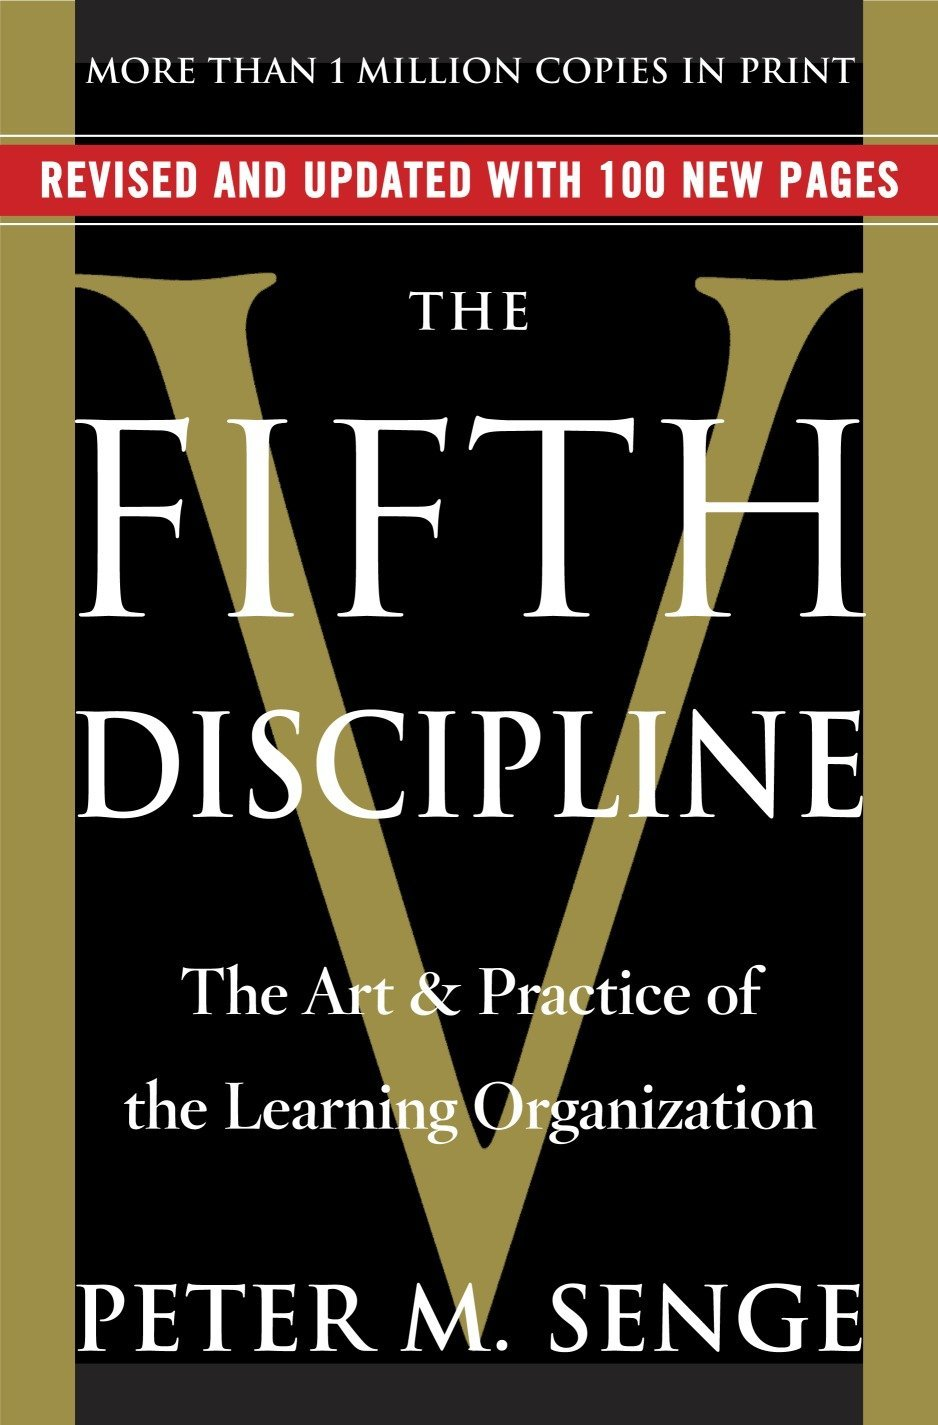 Book “The Fifth Discipline”